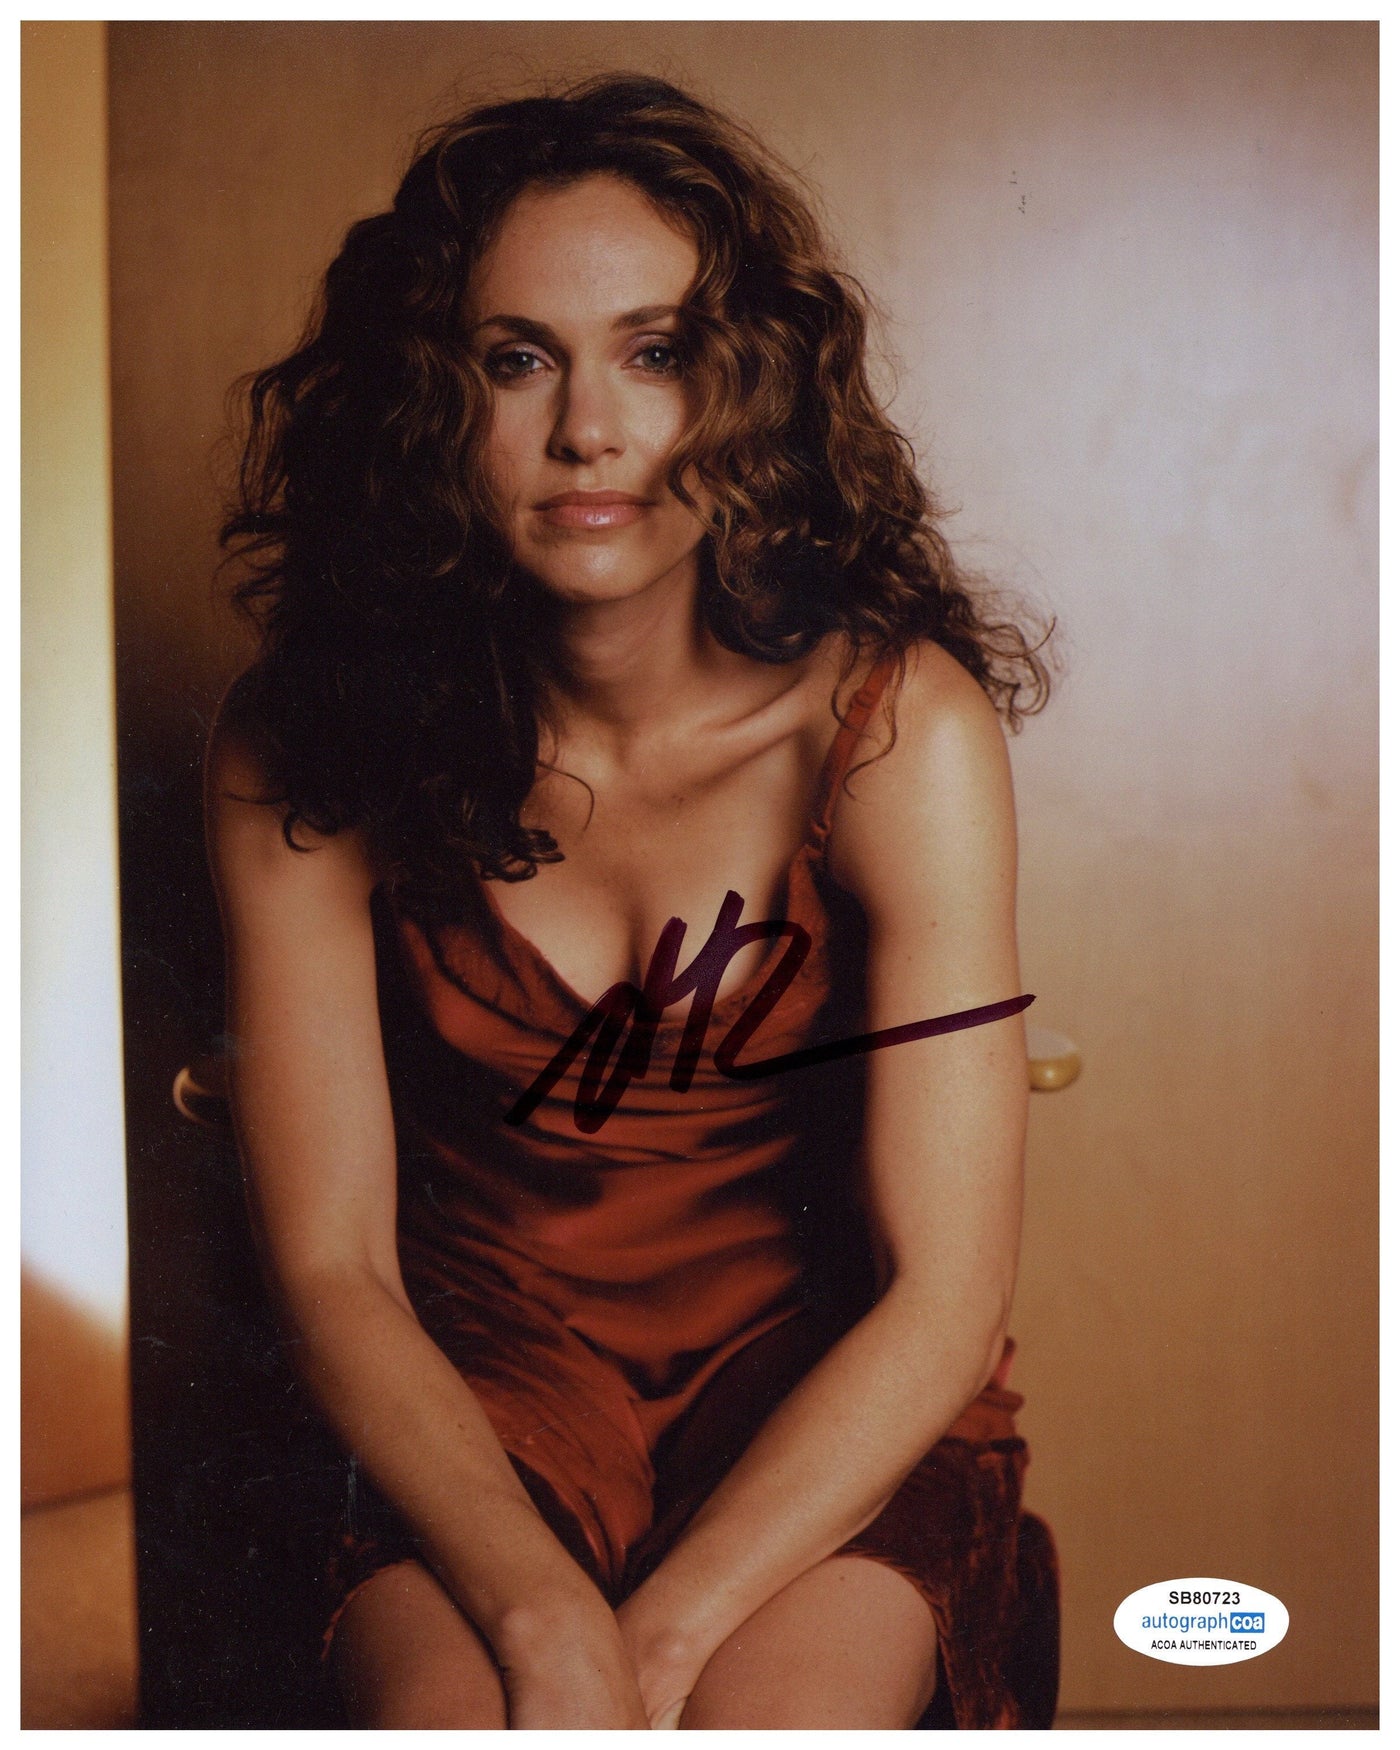 Amy Brenneman Authentic Signed 8x10 Photo Autographed ACOA